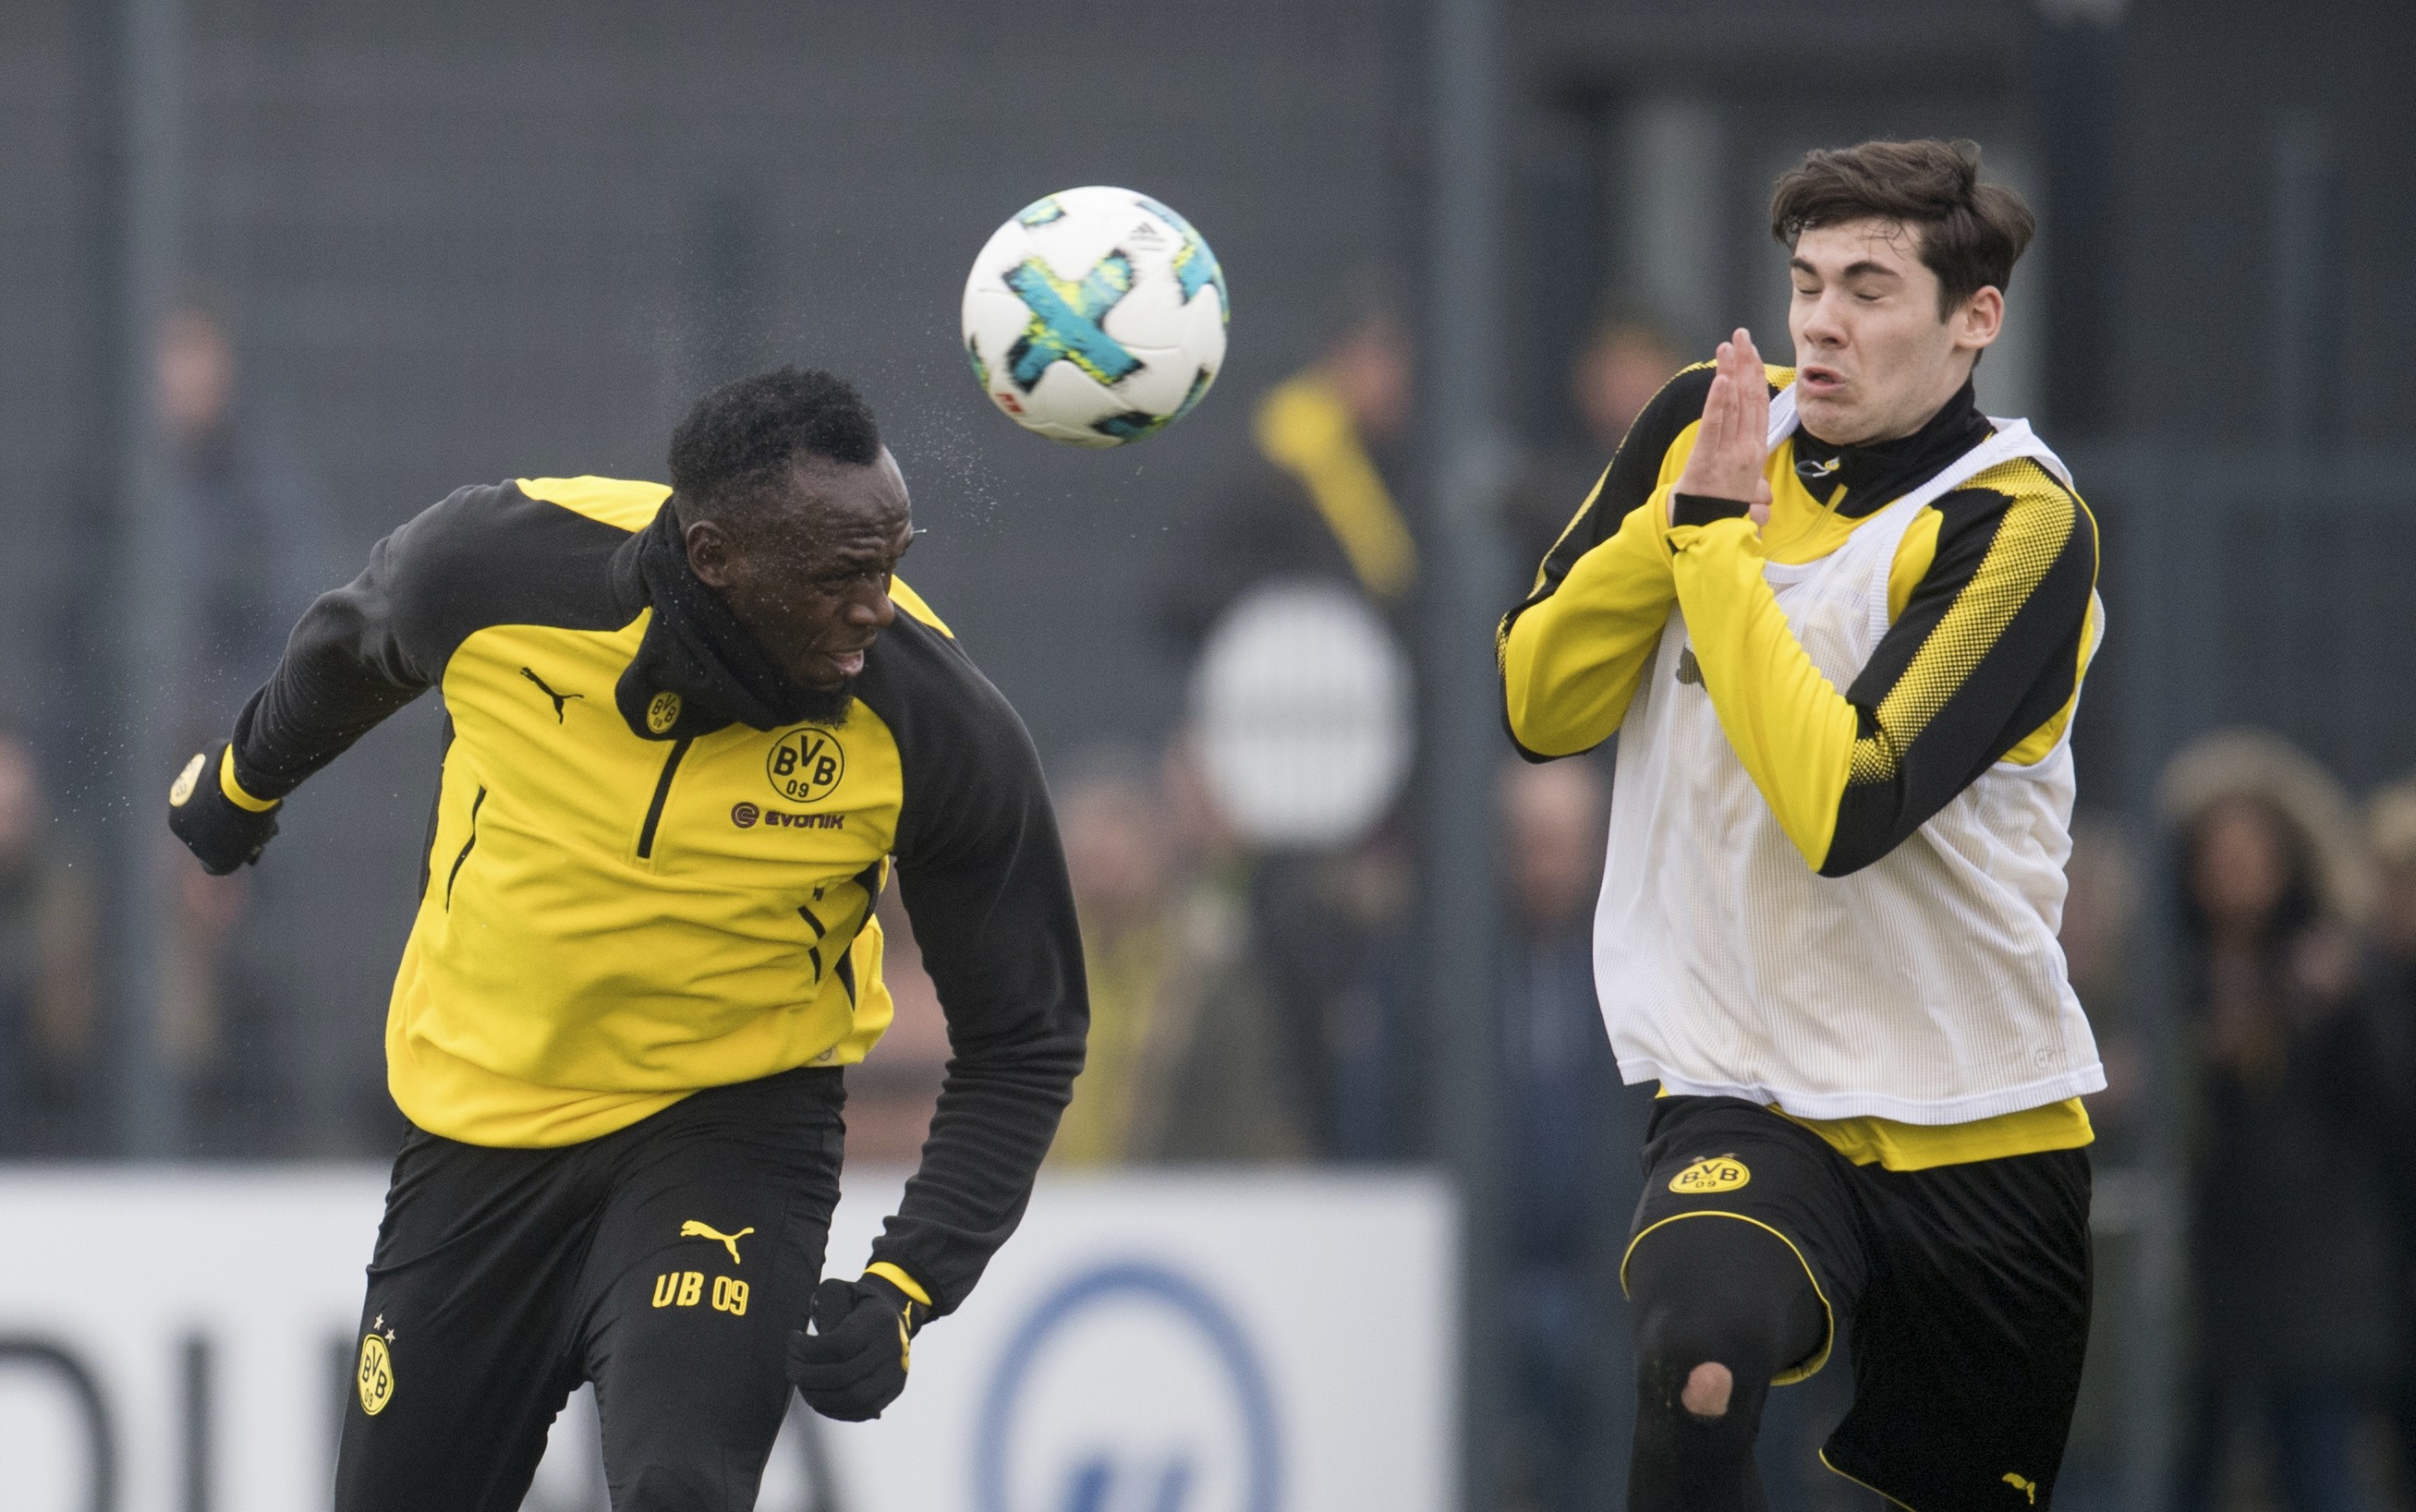 Jamaica's former sprinter Usain Bolt heads the ball in a Borussia Dortmund training session. Photo: AP